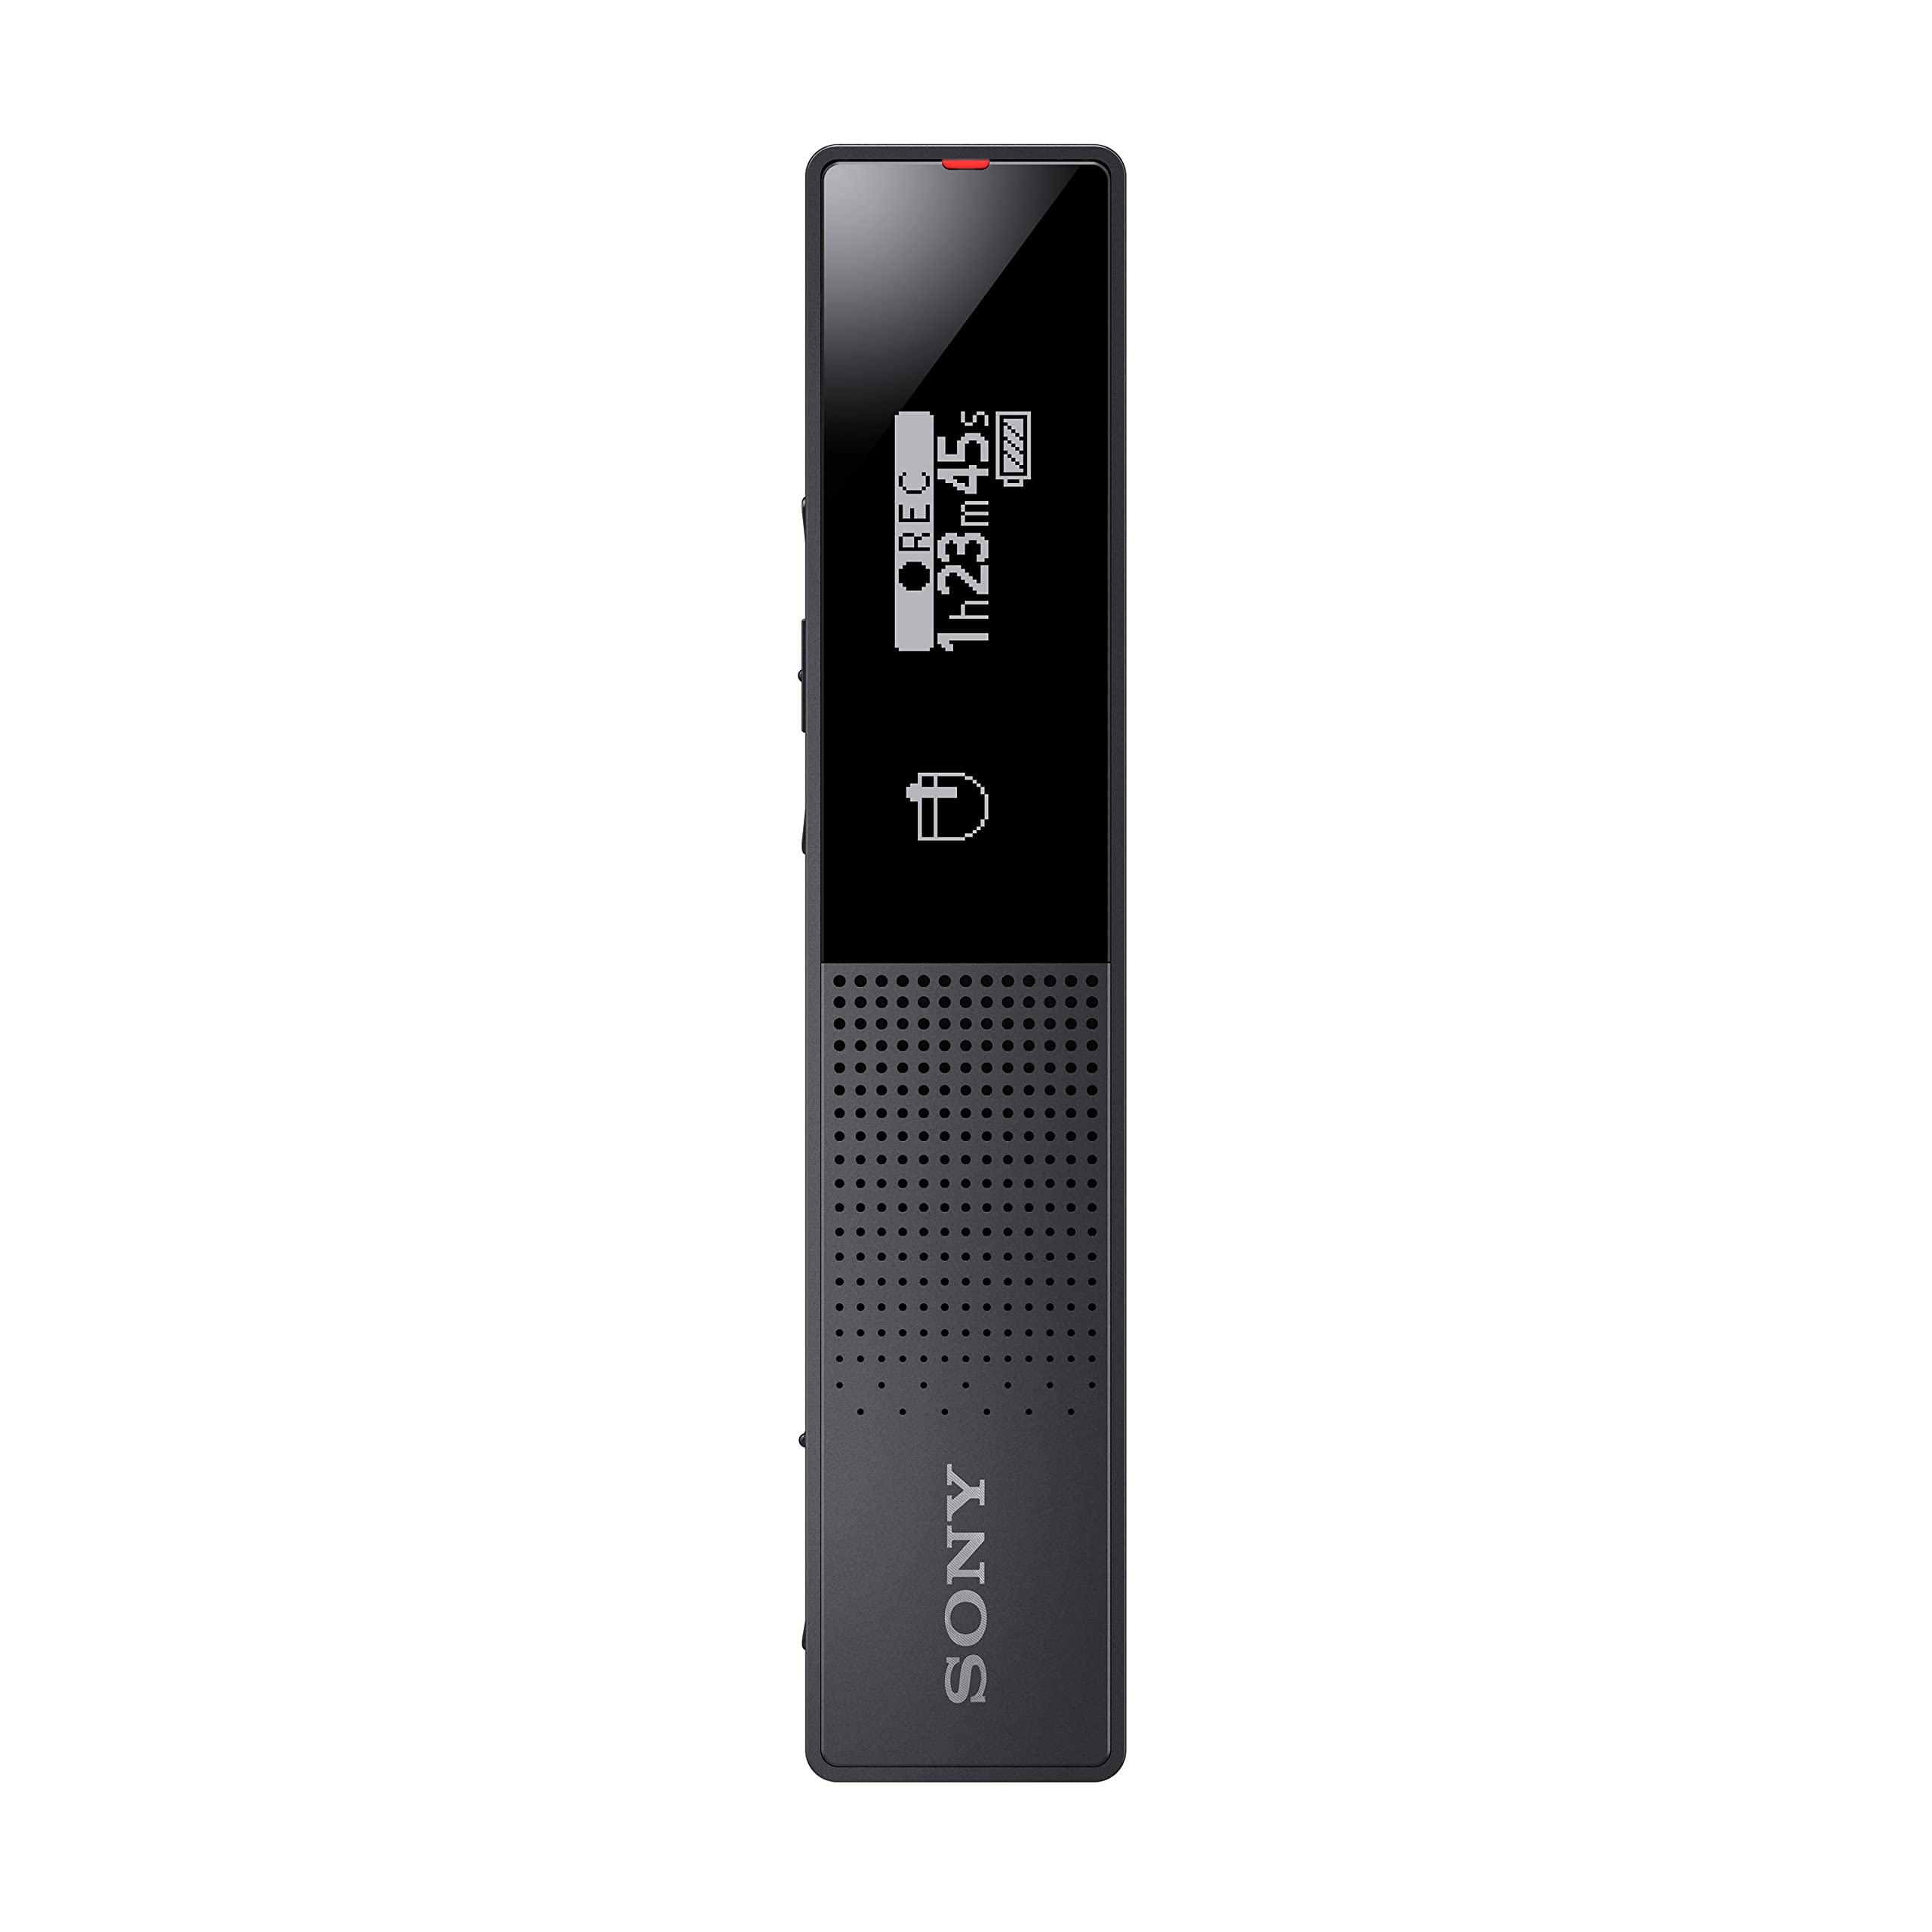 Sony ICD-TX660 - Gravador de voz digital fino com display OLED